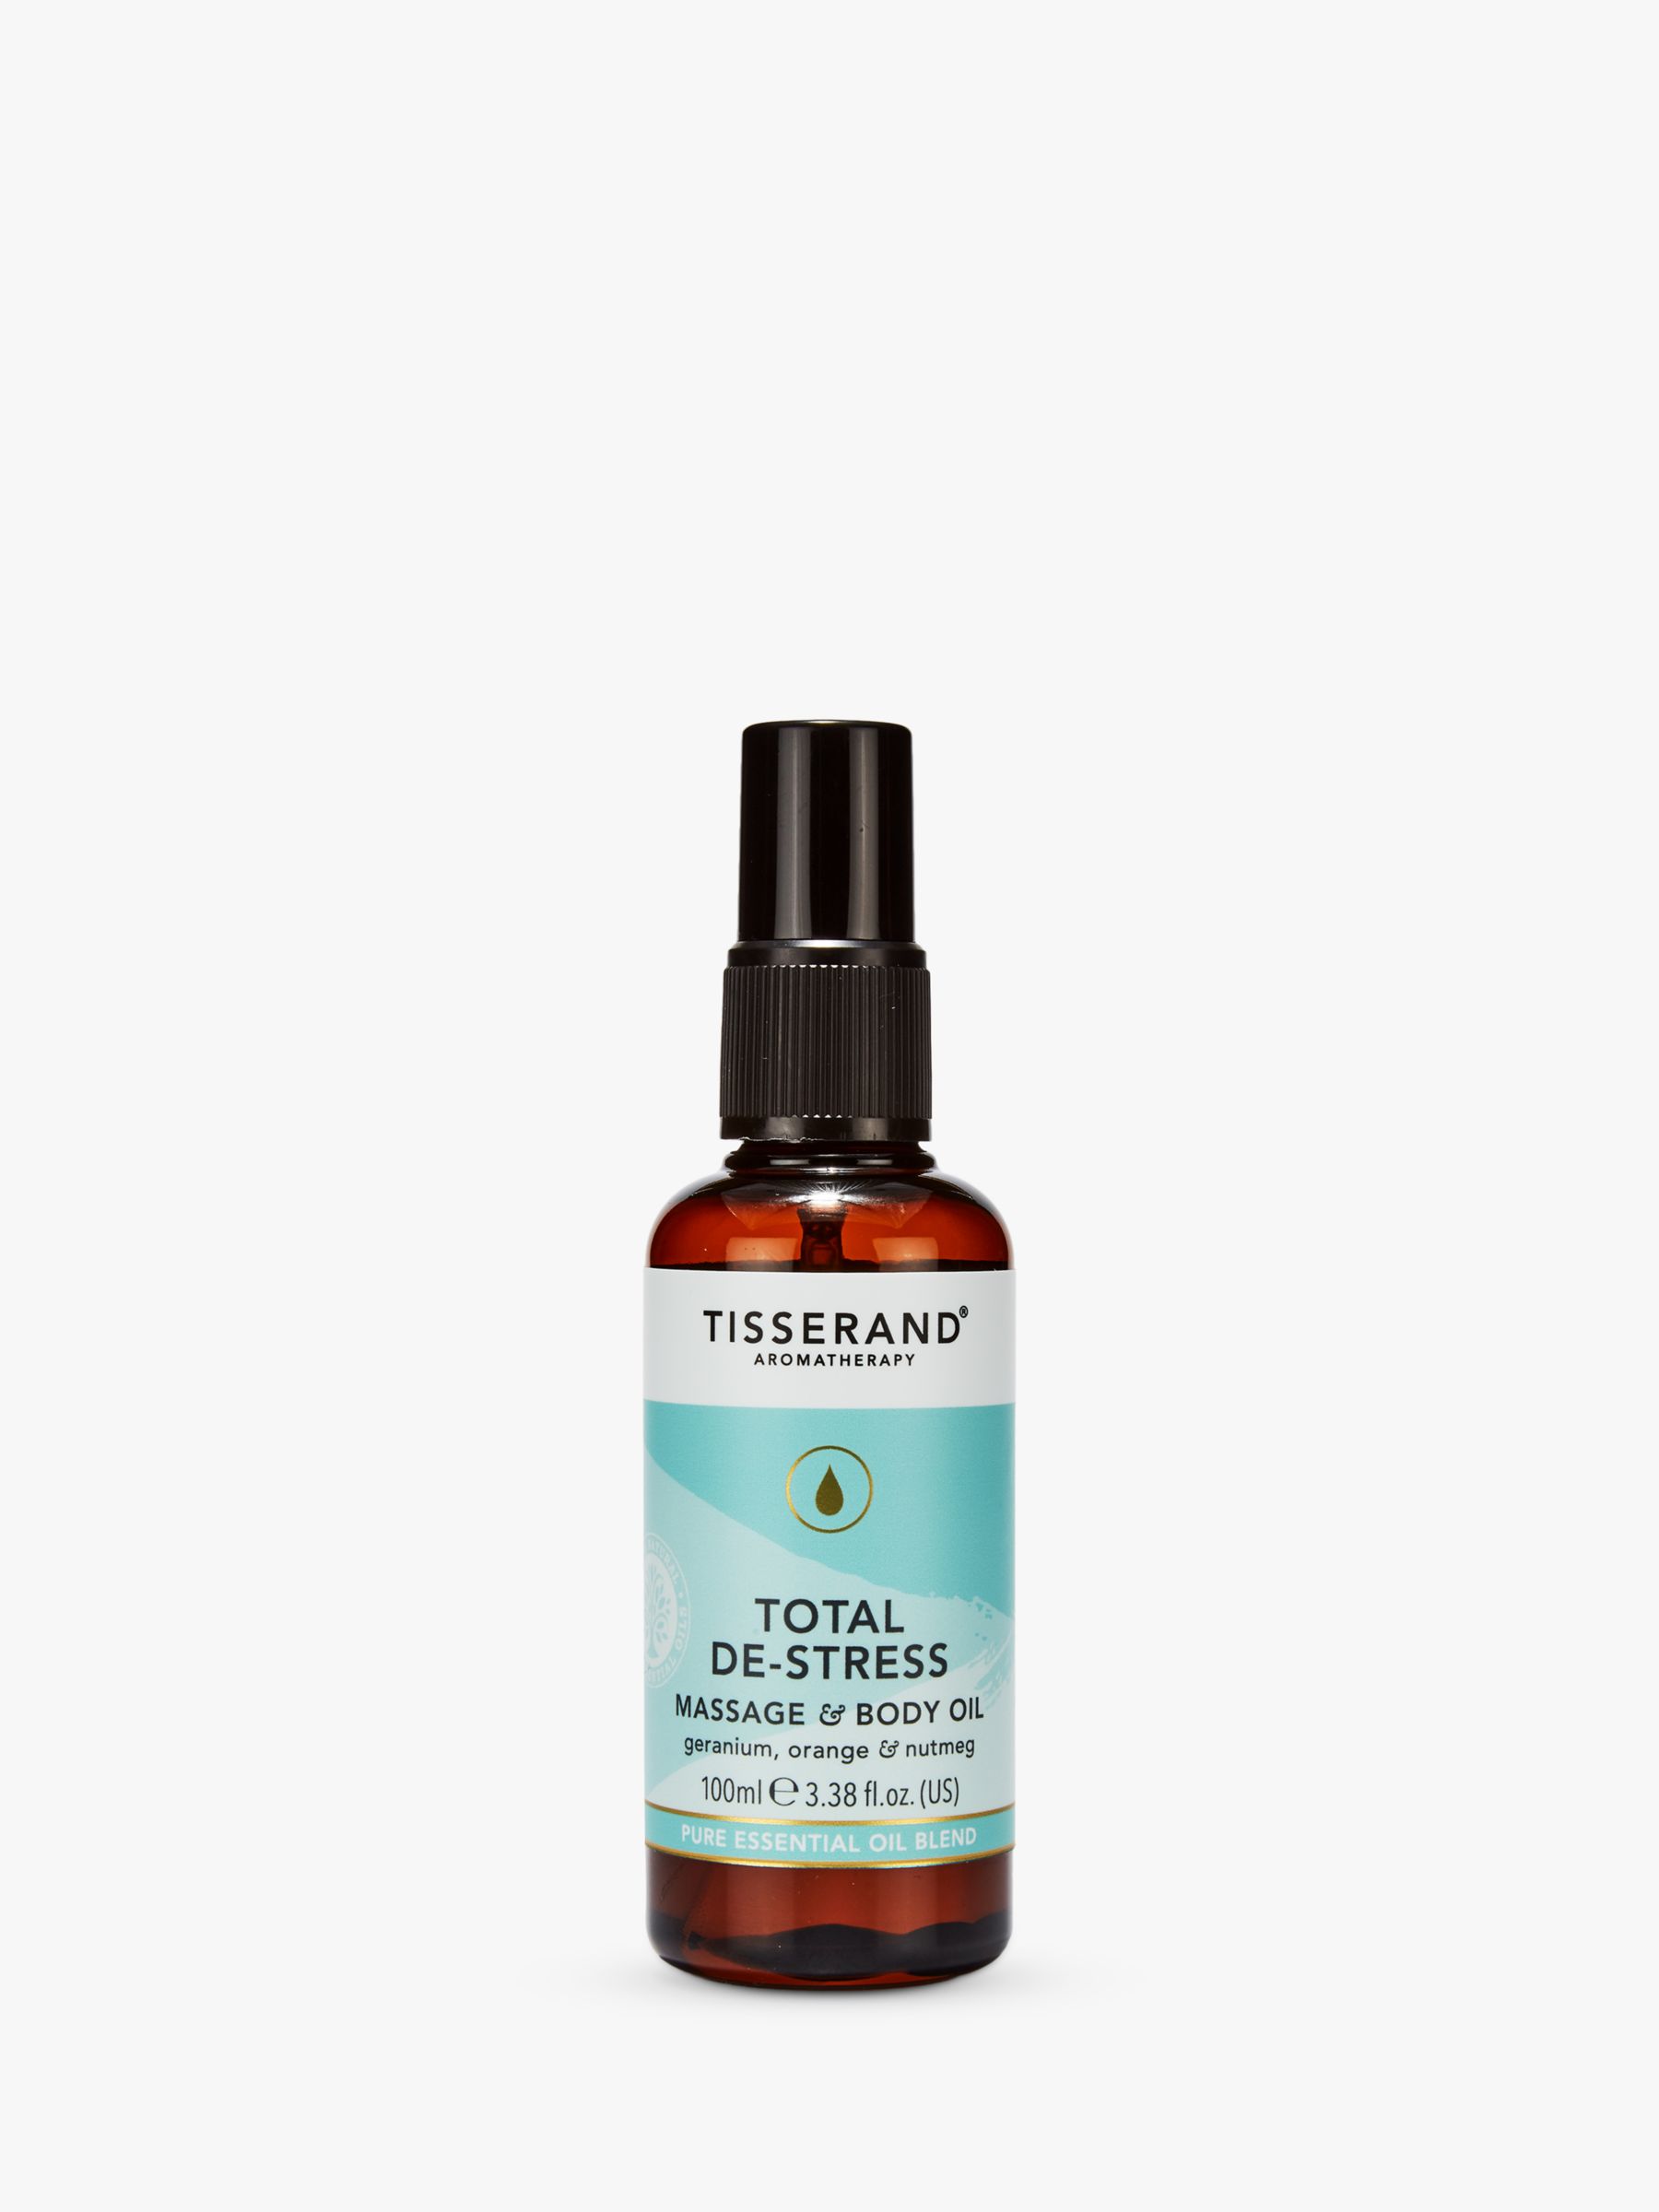 Tisserand Aromatherapy Total De-Stress Massage and Body Oil, 100ml 2